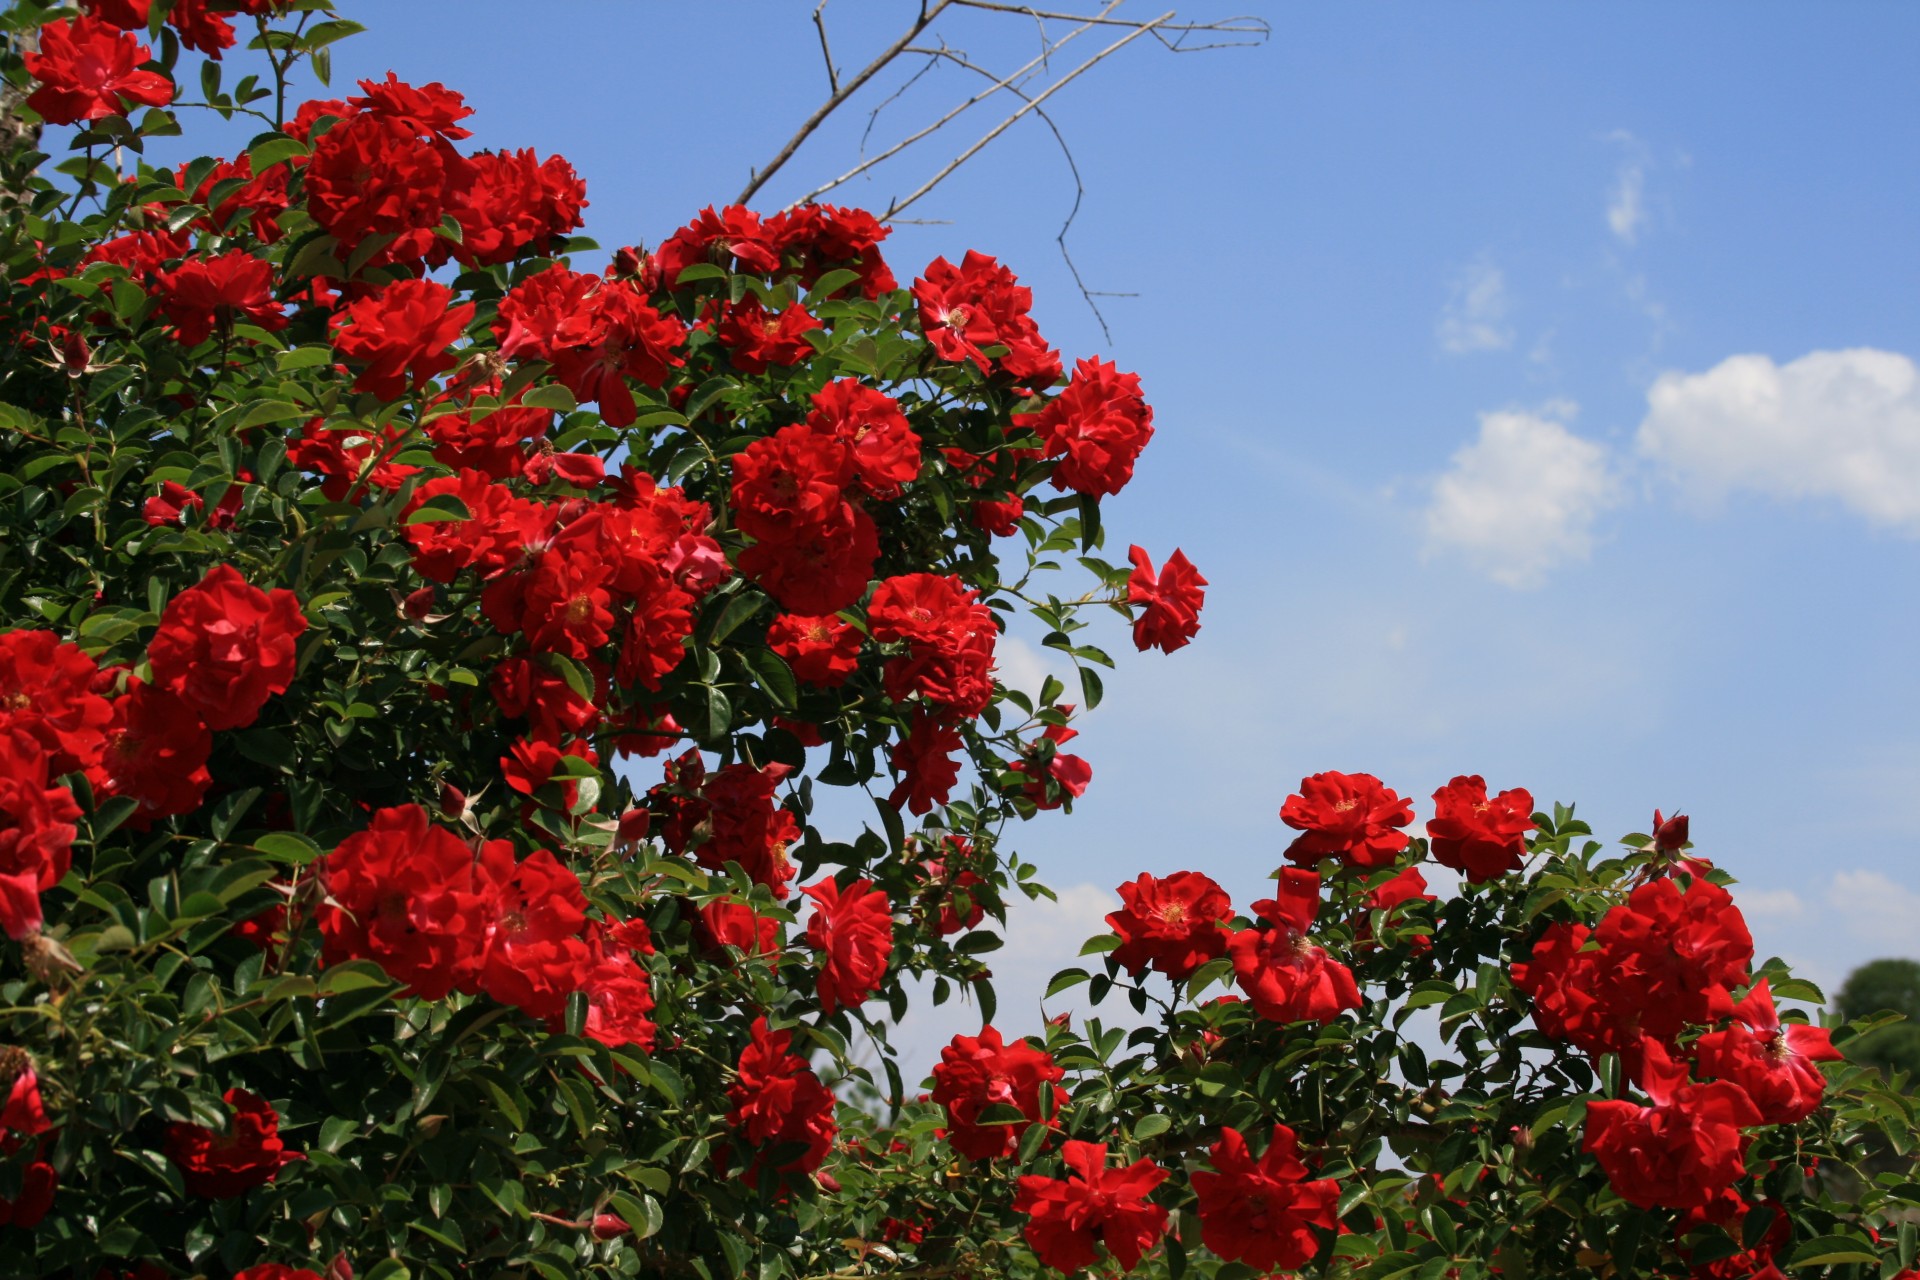 Bright Red Rose Bush